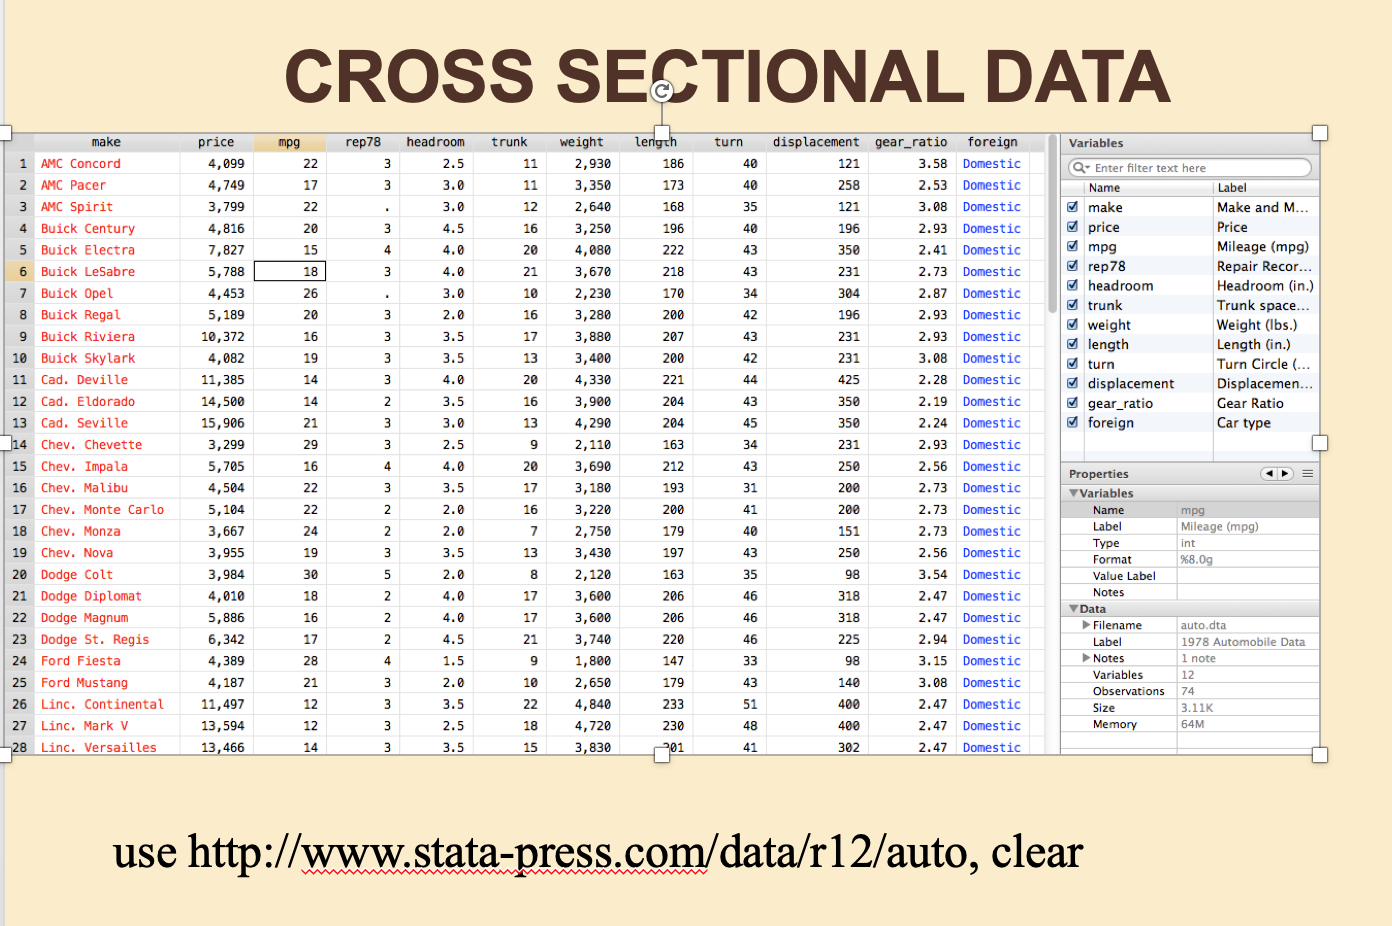 Cross-sectional data